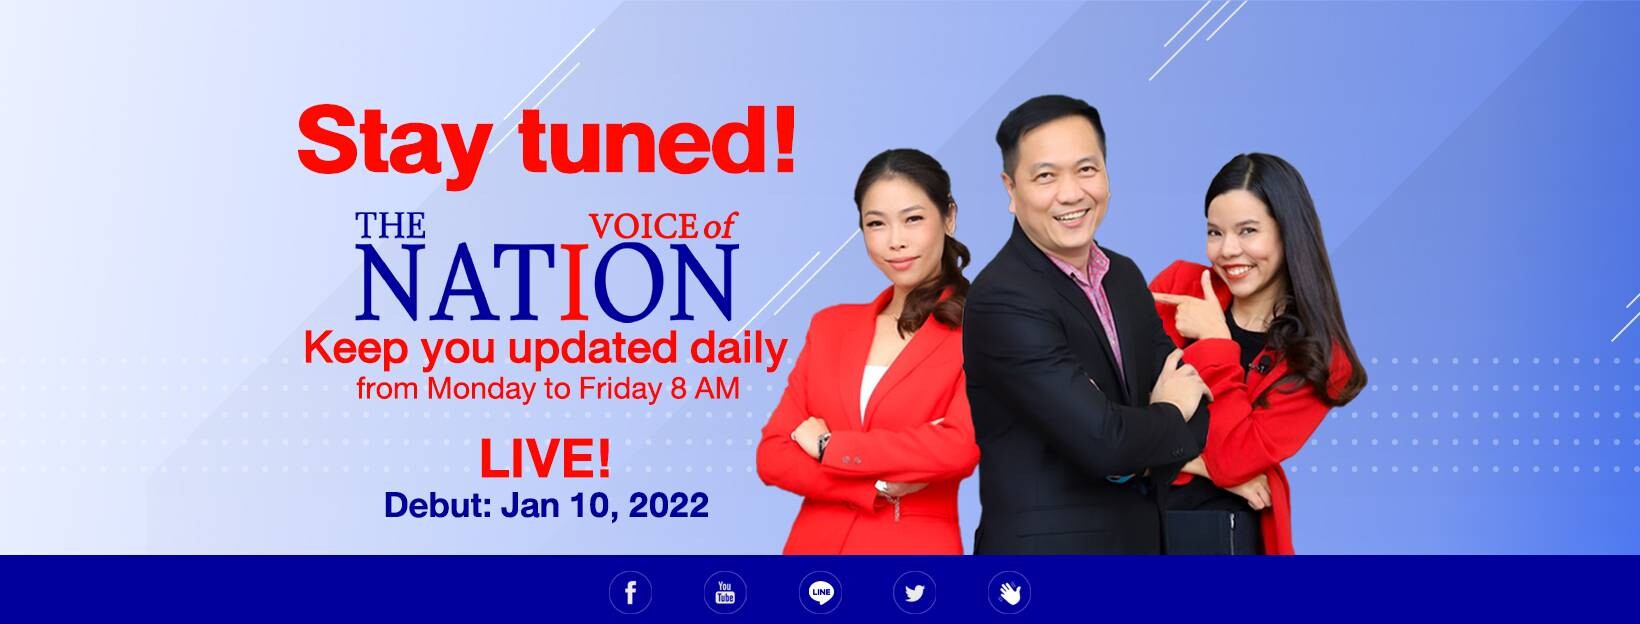 The Nation เปิดตัว 'Voice of The Nation'  รายการข่าวภาคเช้าภาษาอังกฤษสะท้อนคอนเซ็ปต์ "Connecting Thailand to the World"